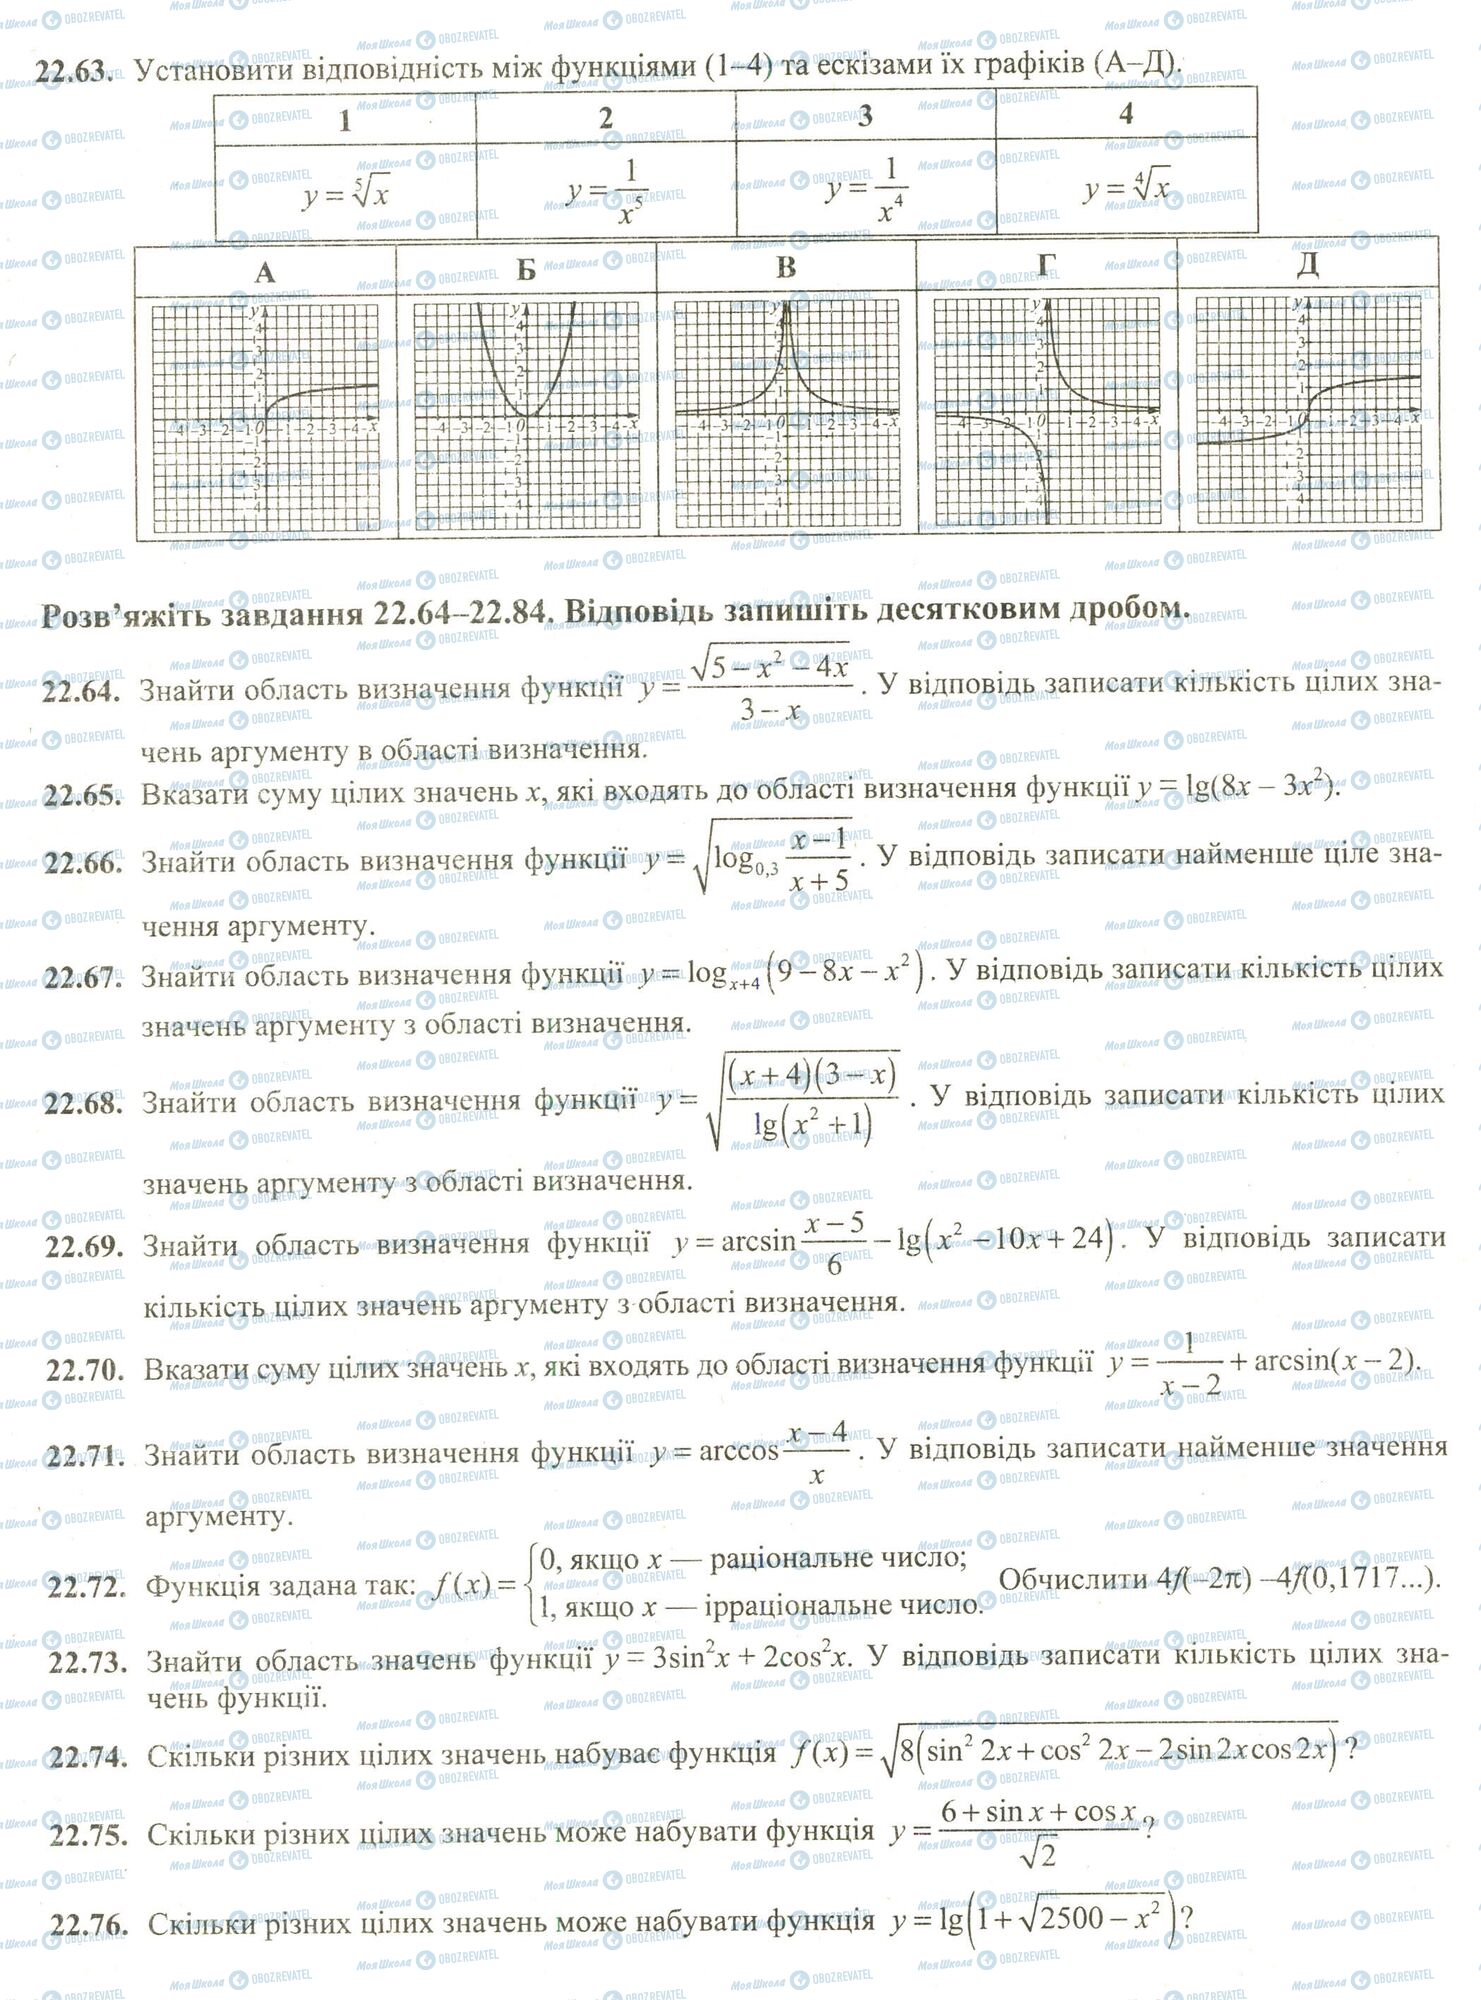 ЗНО Математика 11 класс страница 63-76